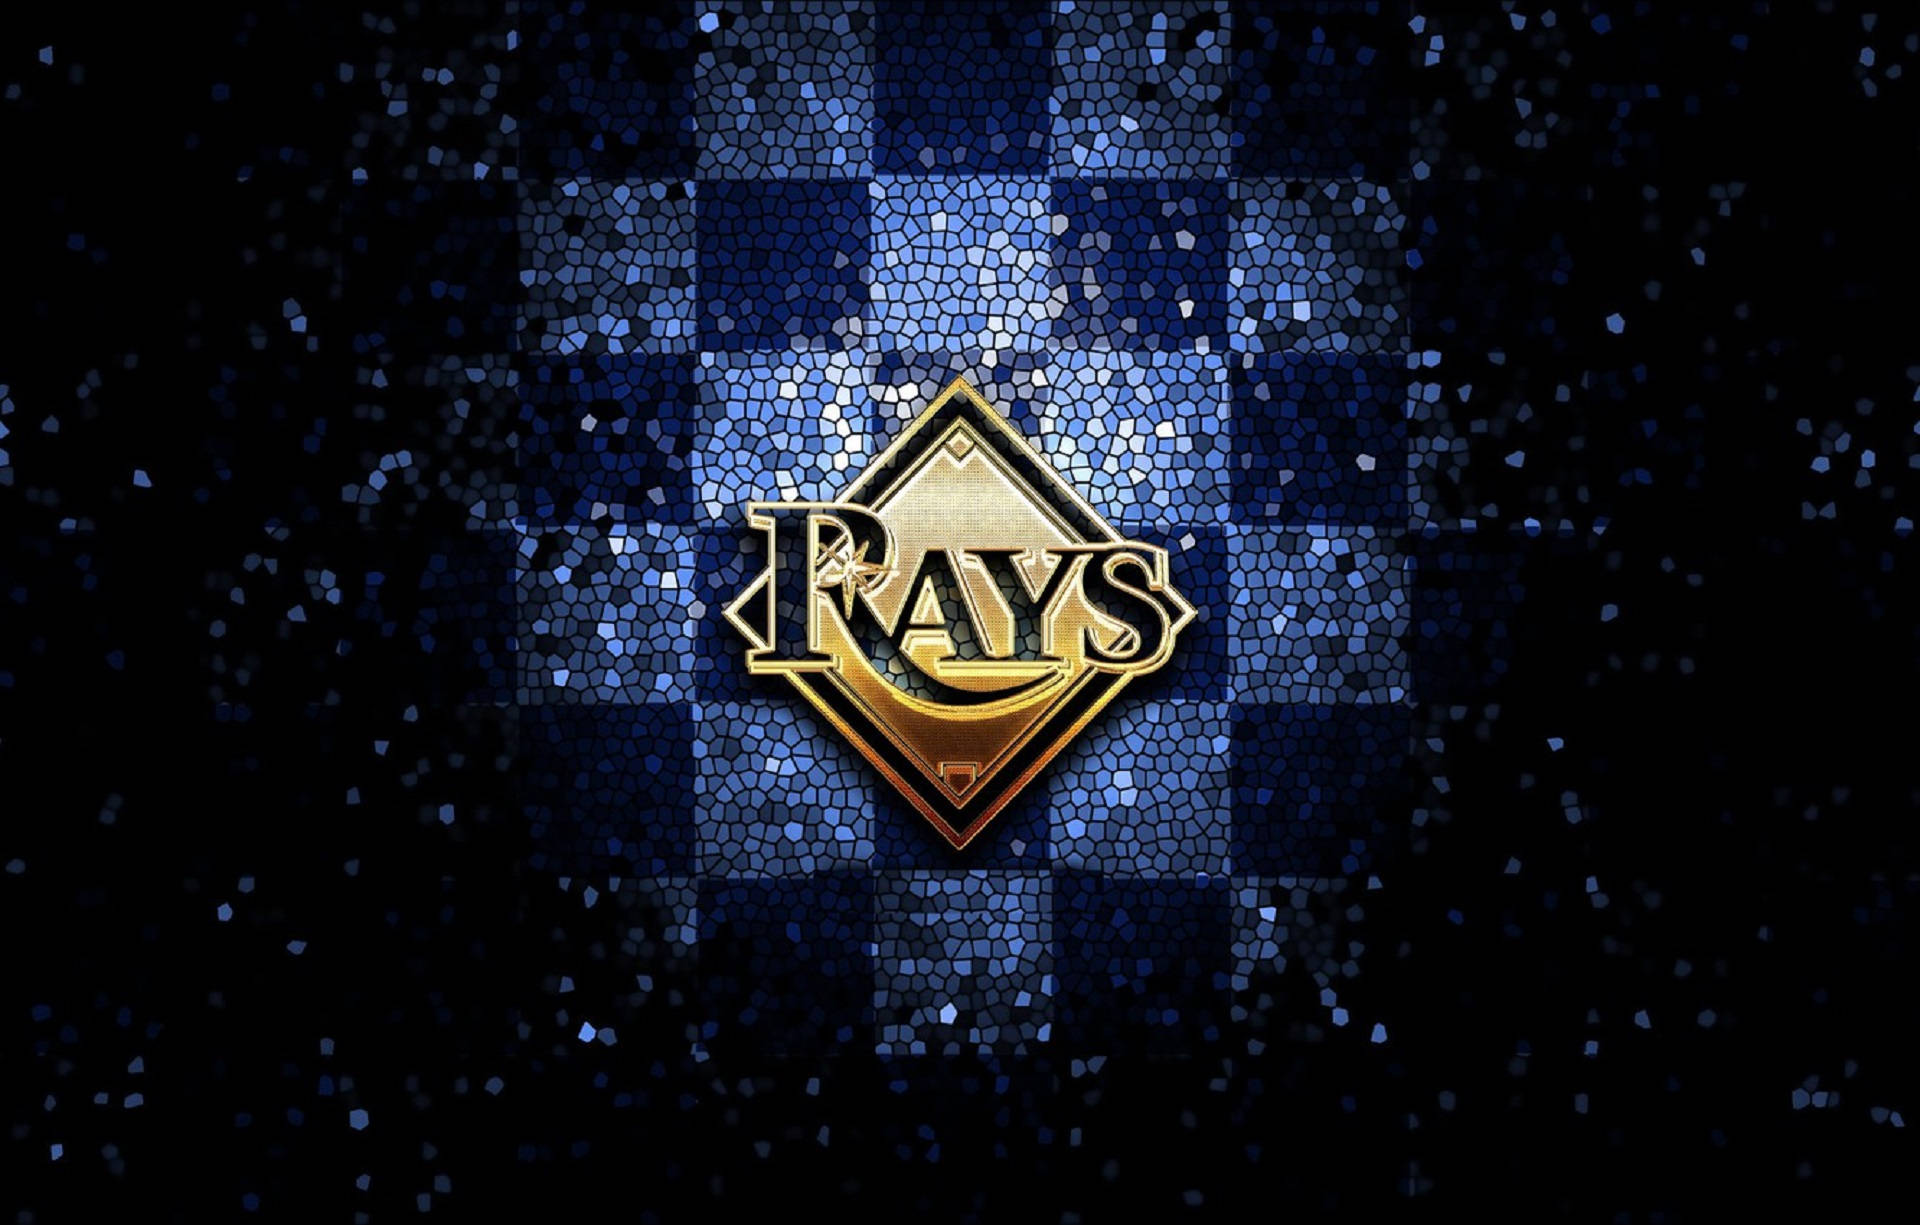 Tampa Bay Rays Gold Emblem Background